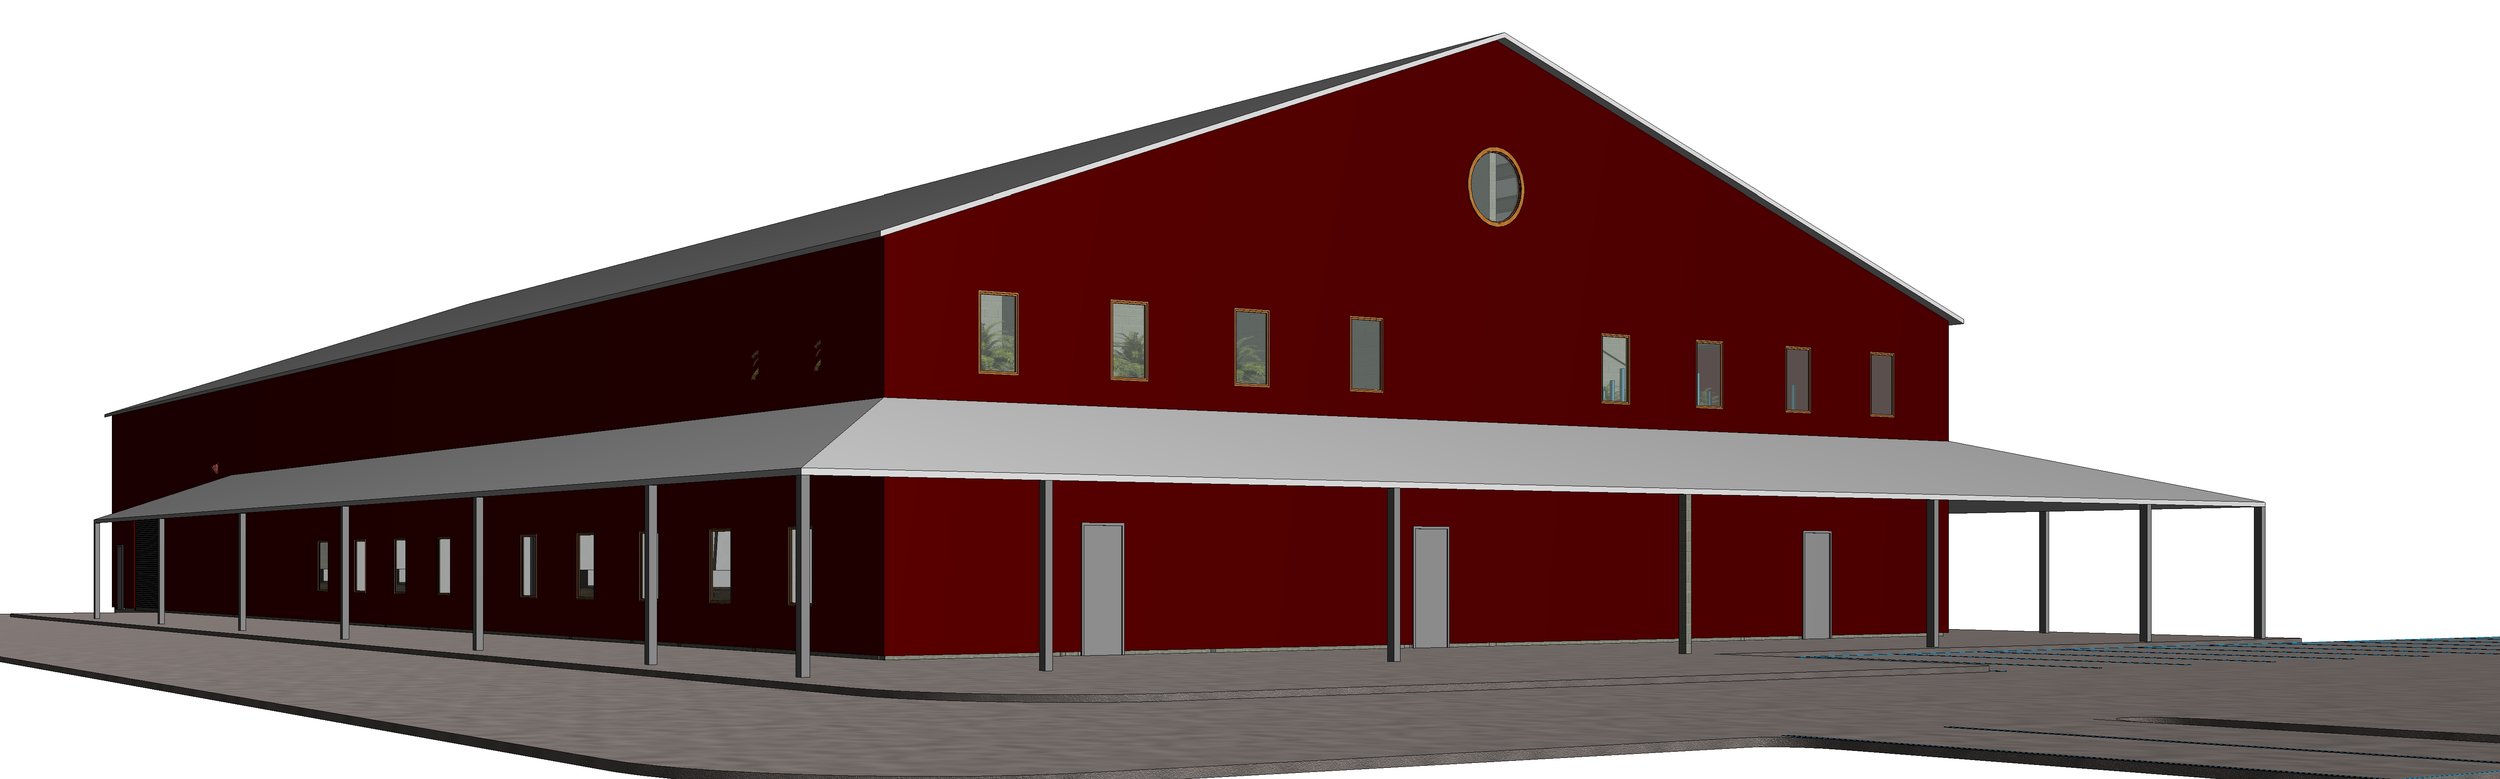 Indoor Farming Facility - 42000 SF - 3D View.jpg